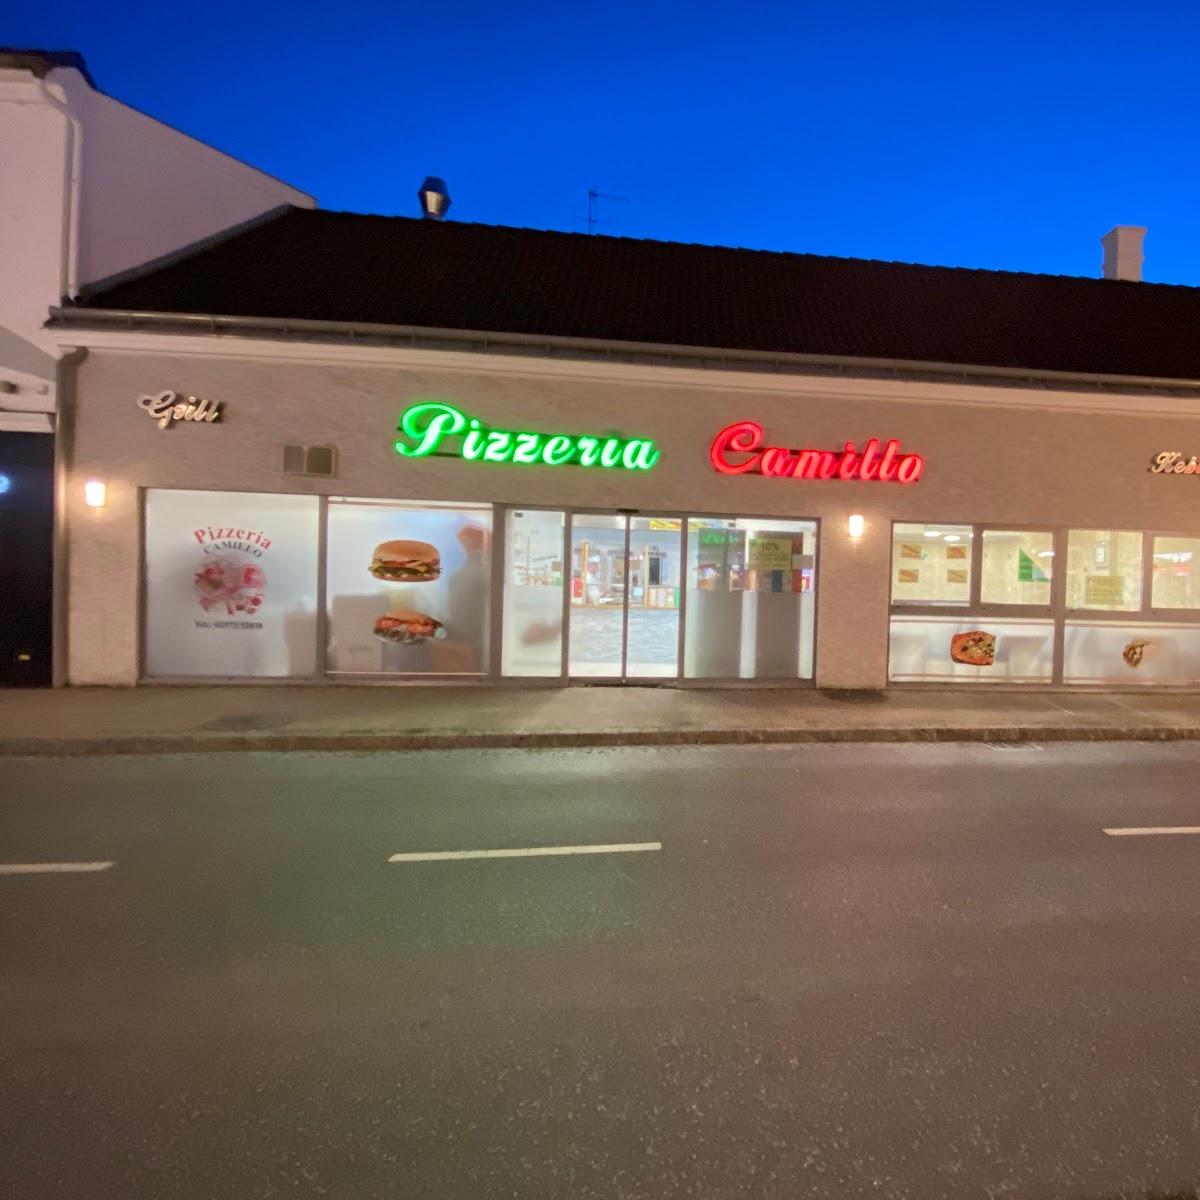 Restaurant "Pizzeria Ristorante Camillo - Saad Pizzeria" in Mistelbach